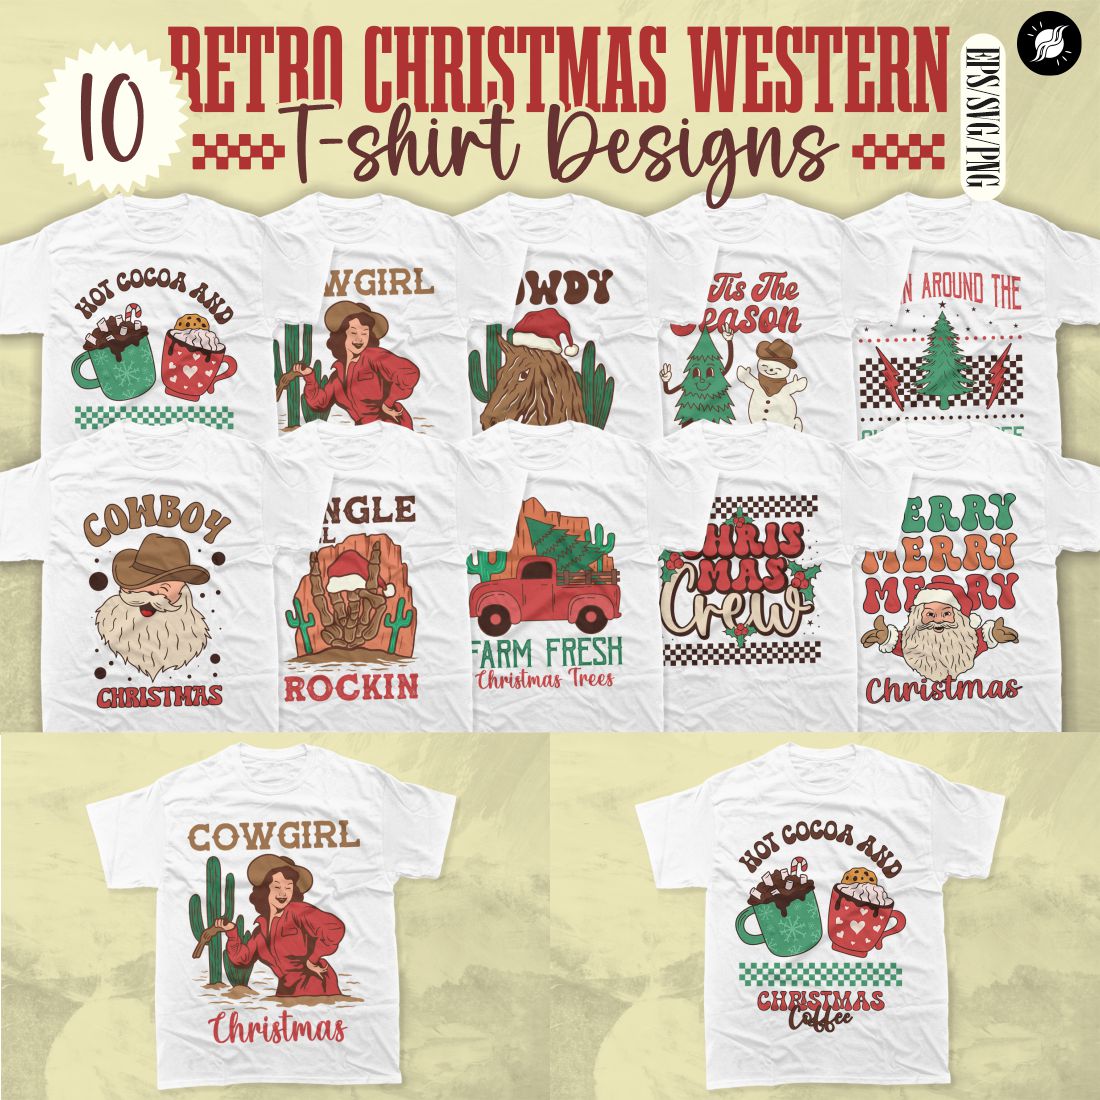 Retro Christmas Western Sublimation T-shirt Designs Bundle cover image.